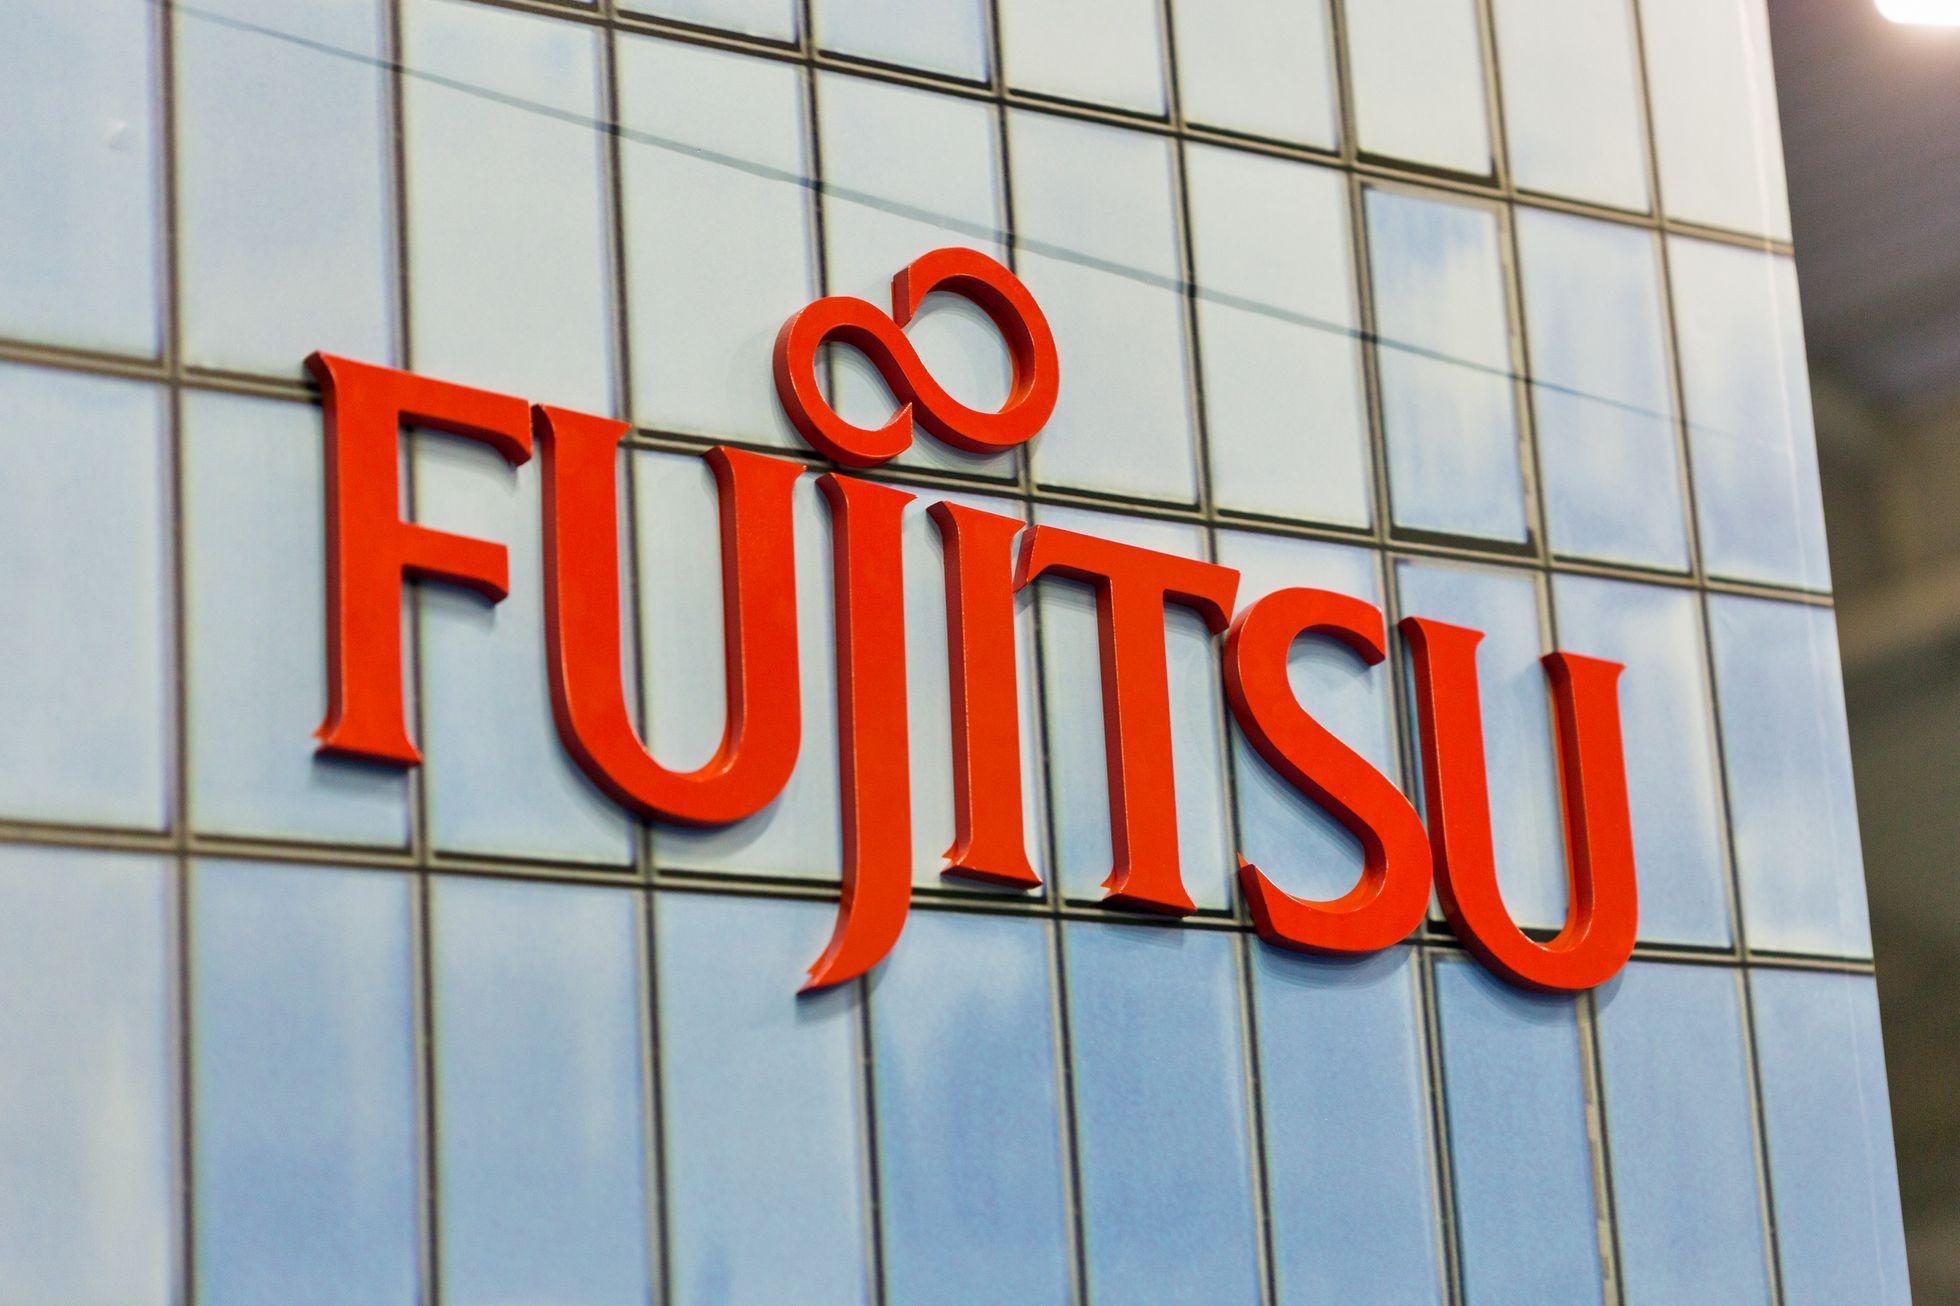 Fujitsu Japonsko elektronika počítač export technologie